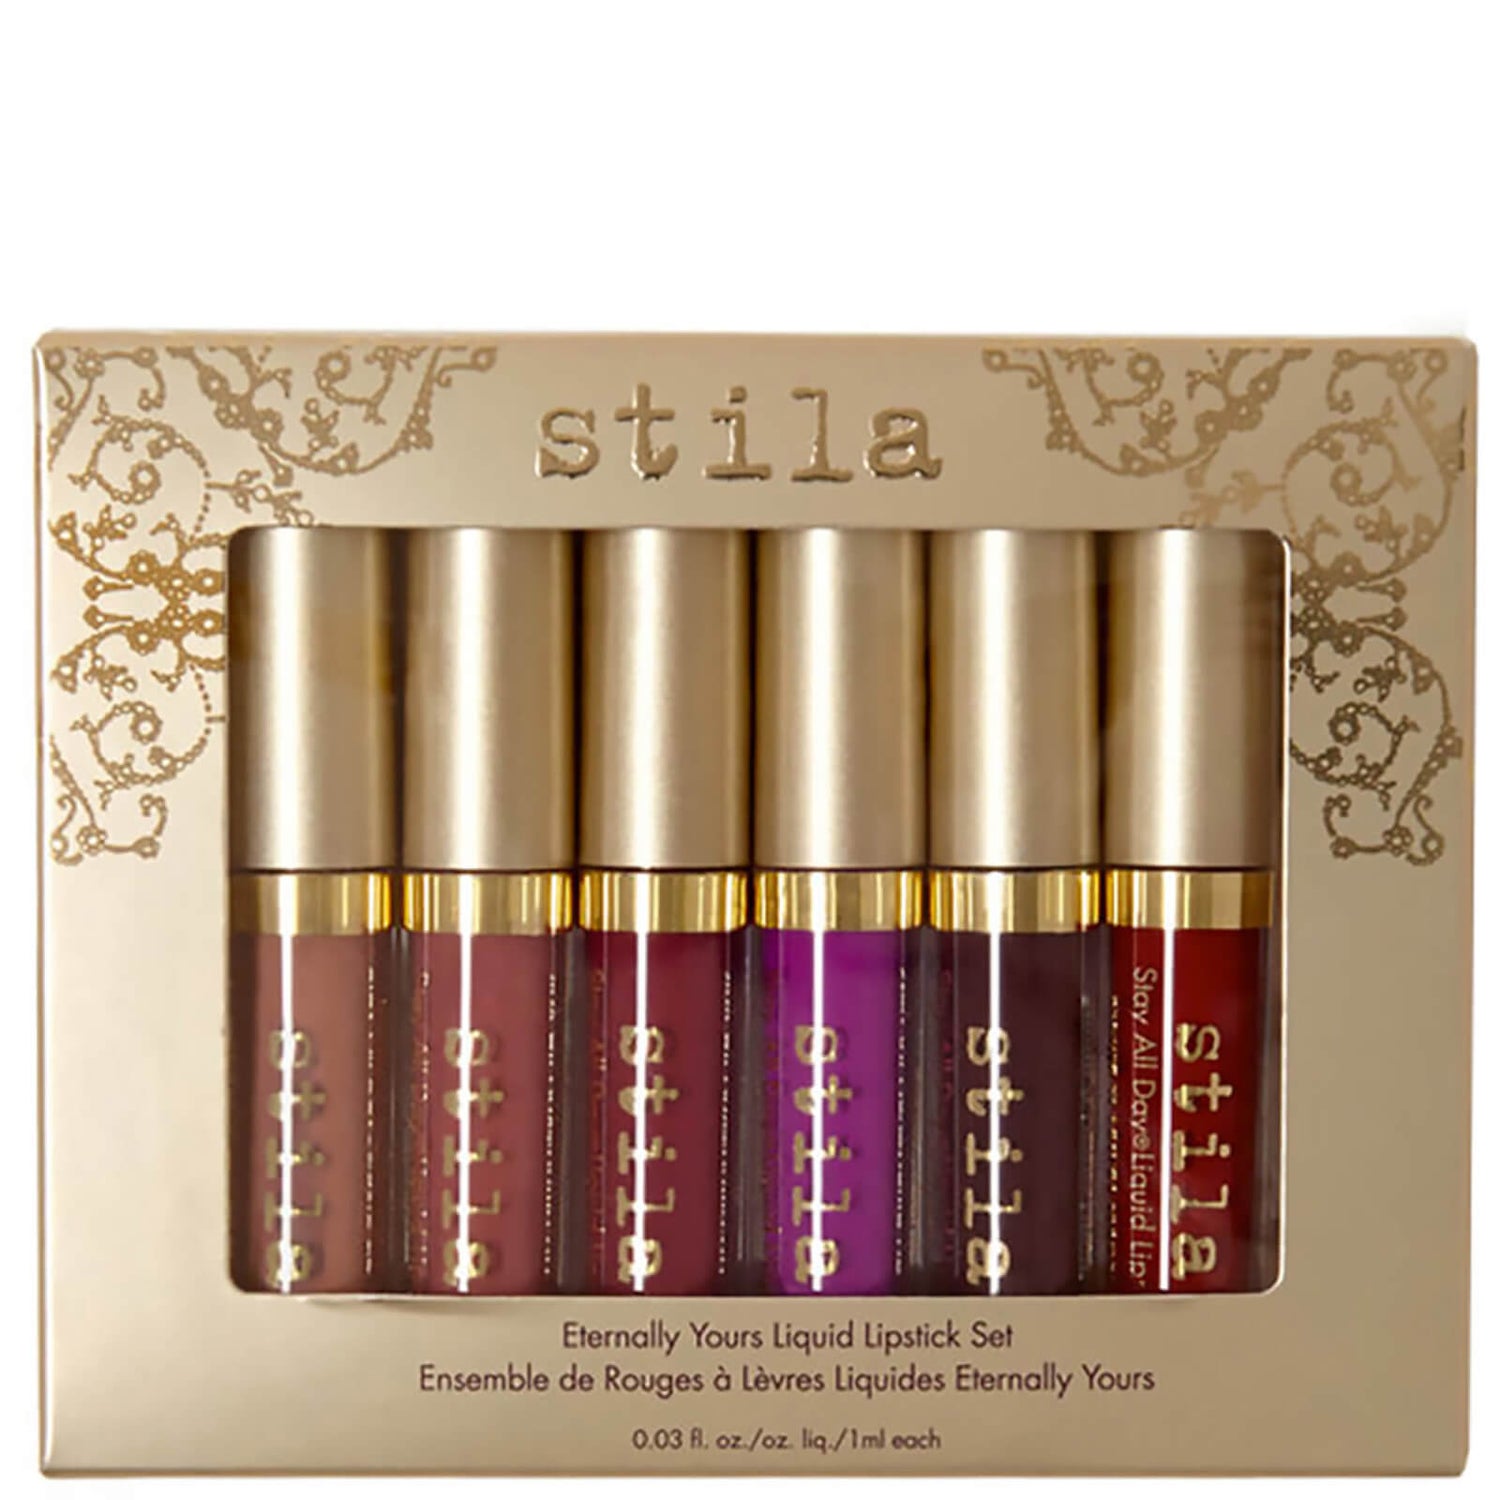 Stila Eternally Yours Liquid Lipstick Set (6 x Deluxe Stay All Day Liquid Lipsticks) - Worth £66.00